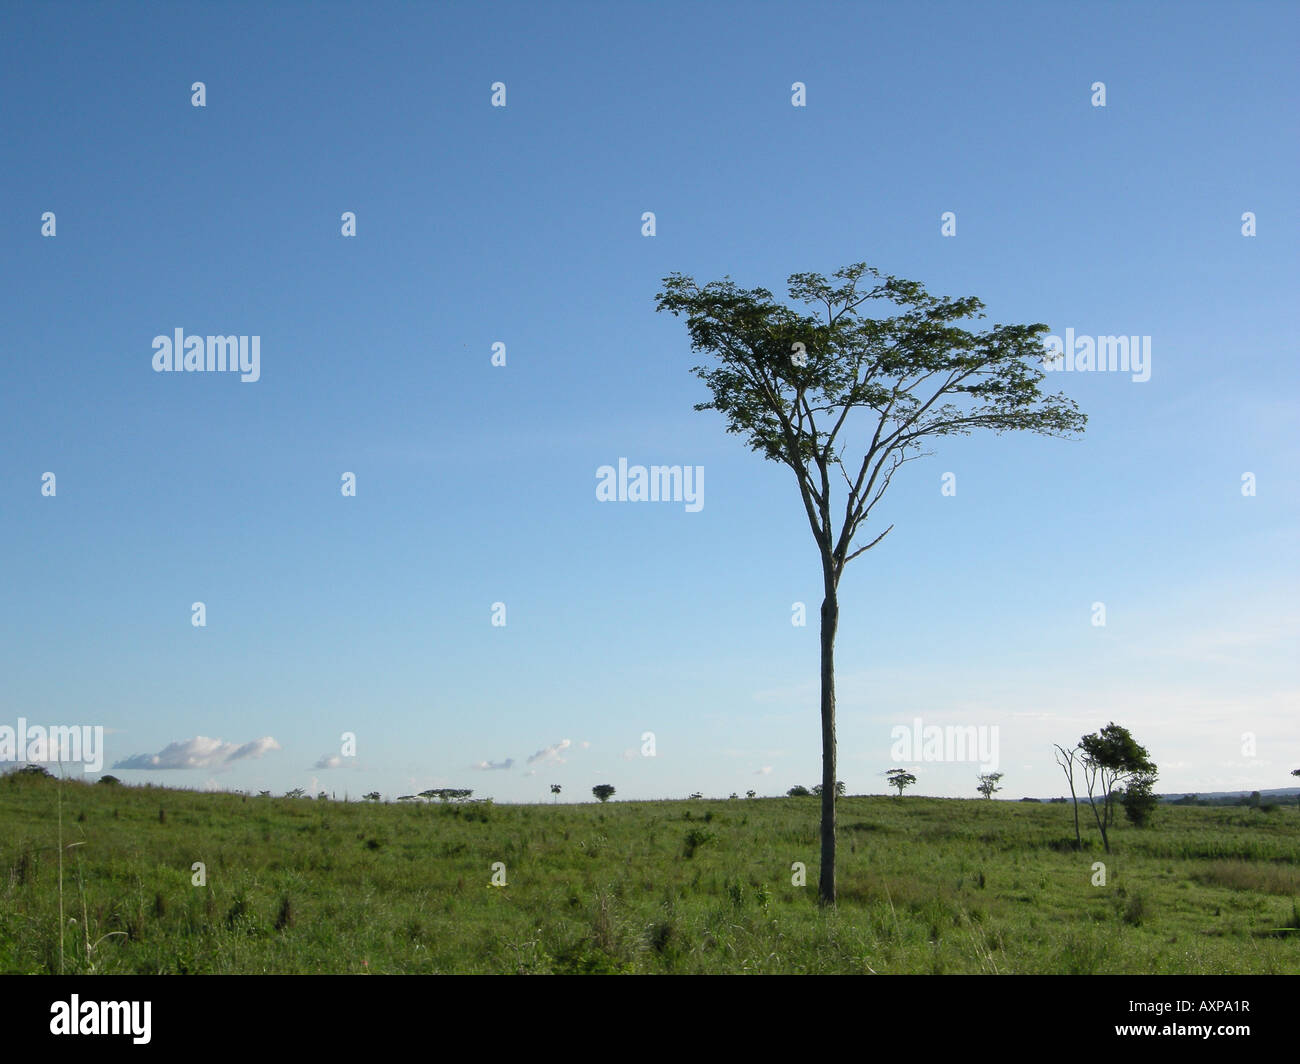 Panoramic view  in a farm Guarico state Los Llanos Venezuela Stock Photo